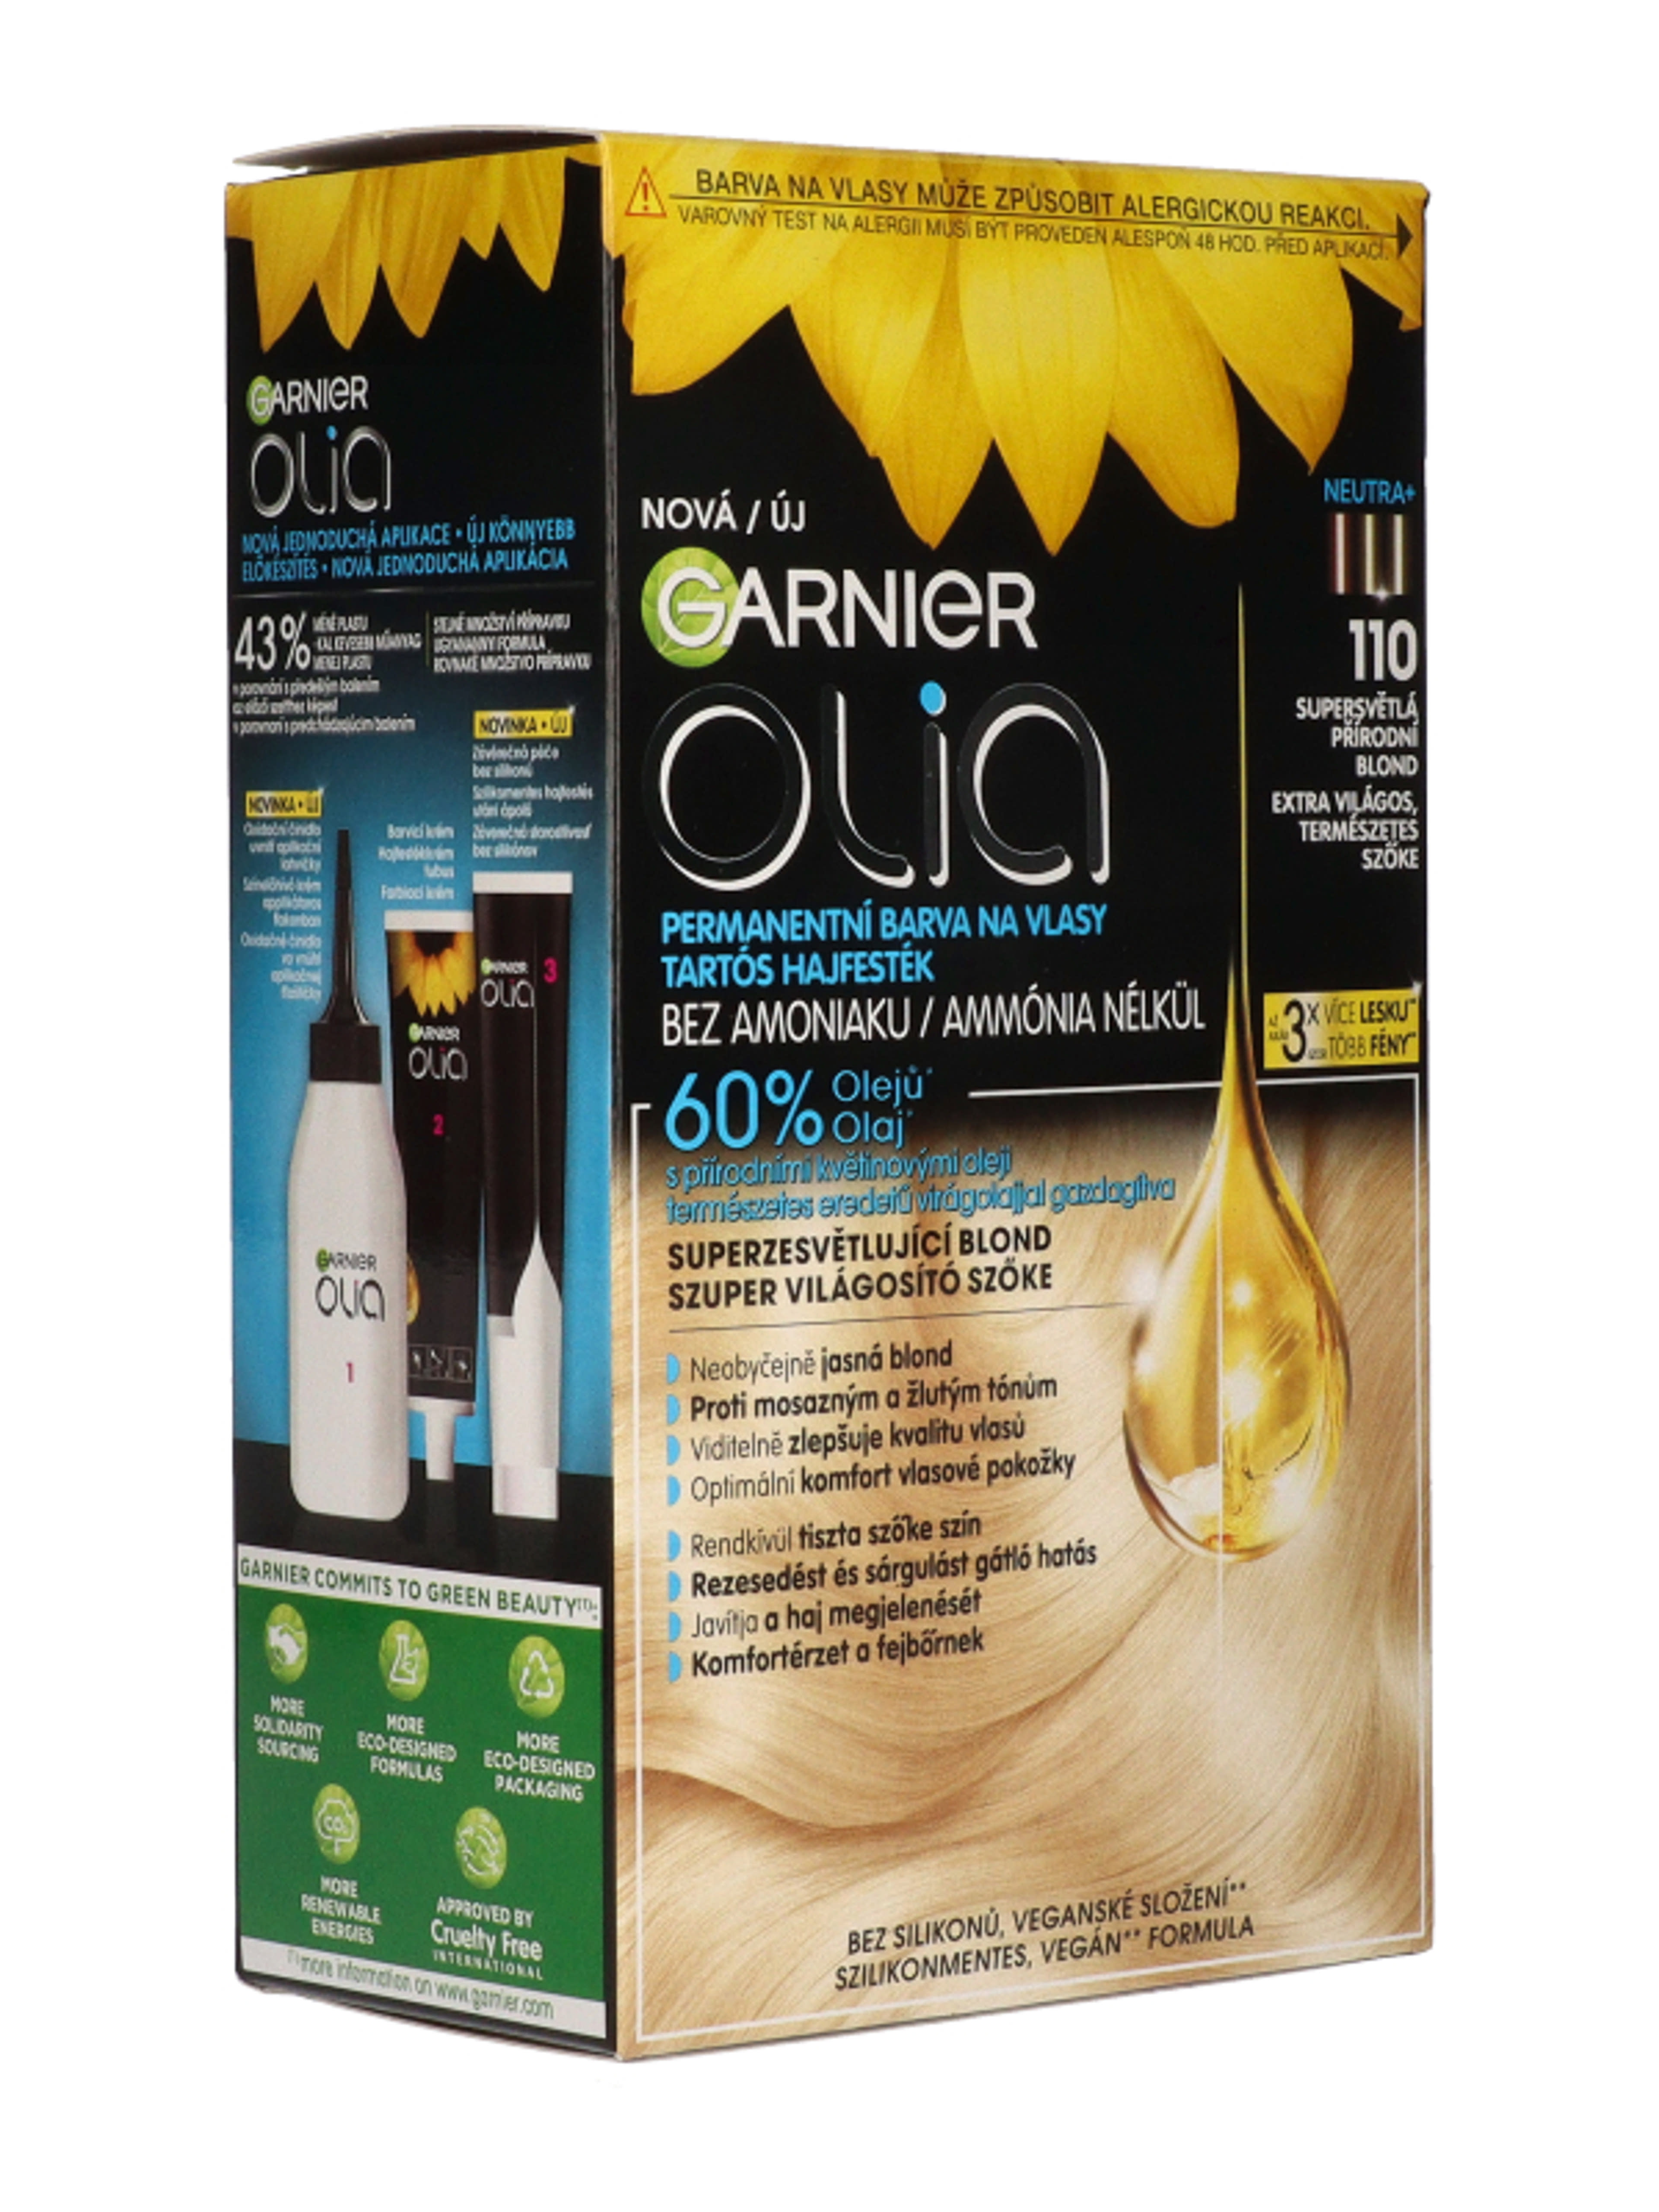 Garnier Olia tartós hajfesték /110 super light natural blonde - 1 db-4